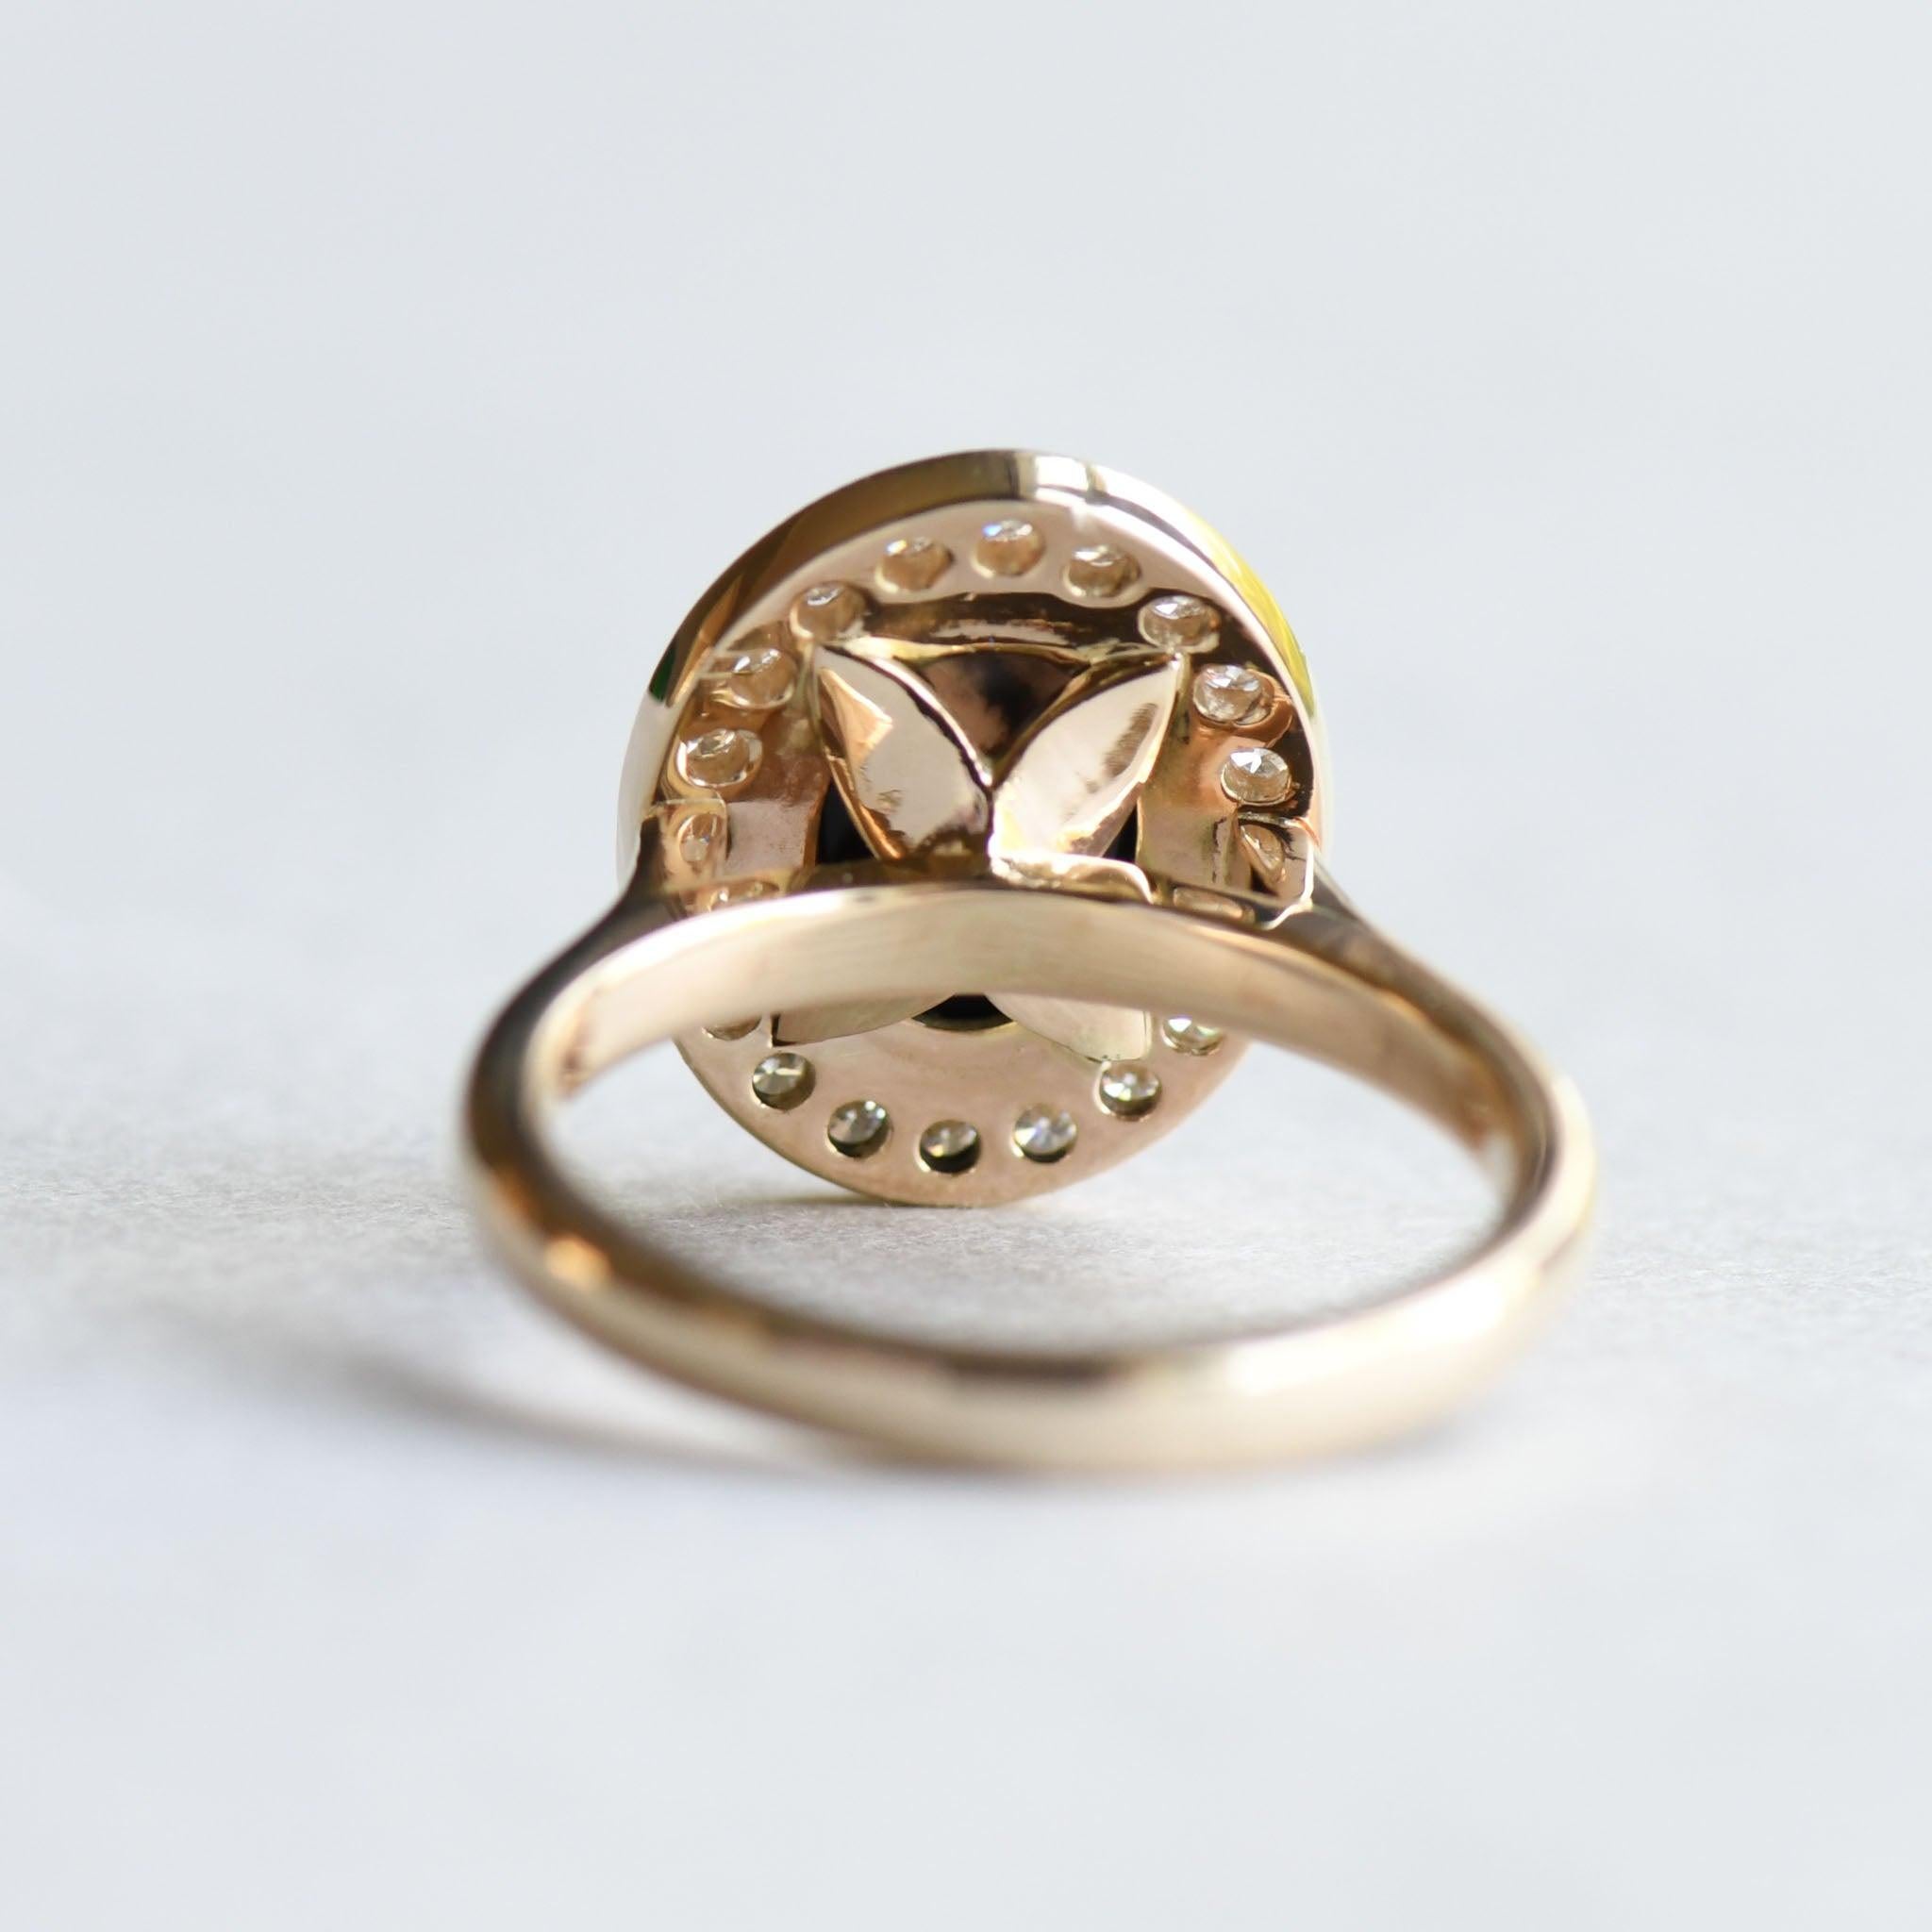 For Sale:  Australian Black Opal 1.188 Carat Ring, 14 Karat Gold Halo Ring 2